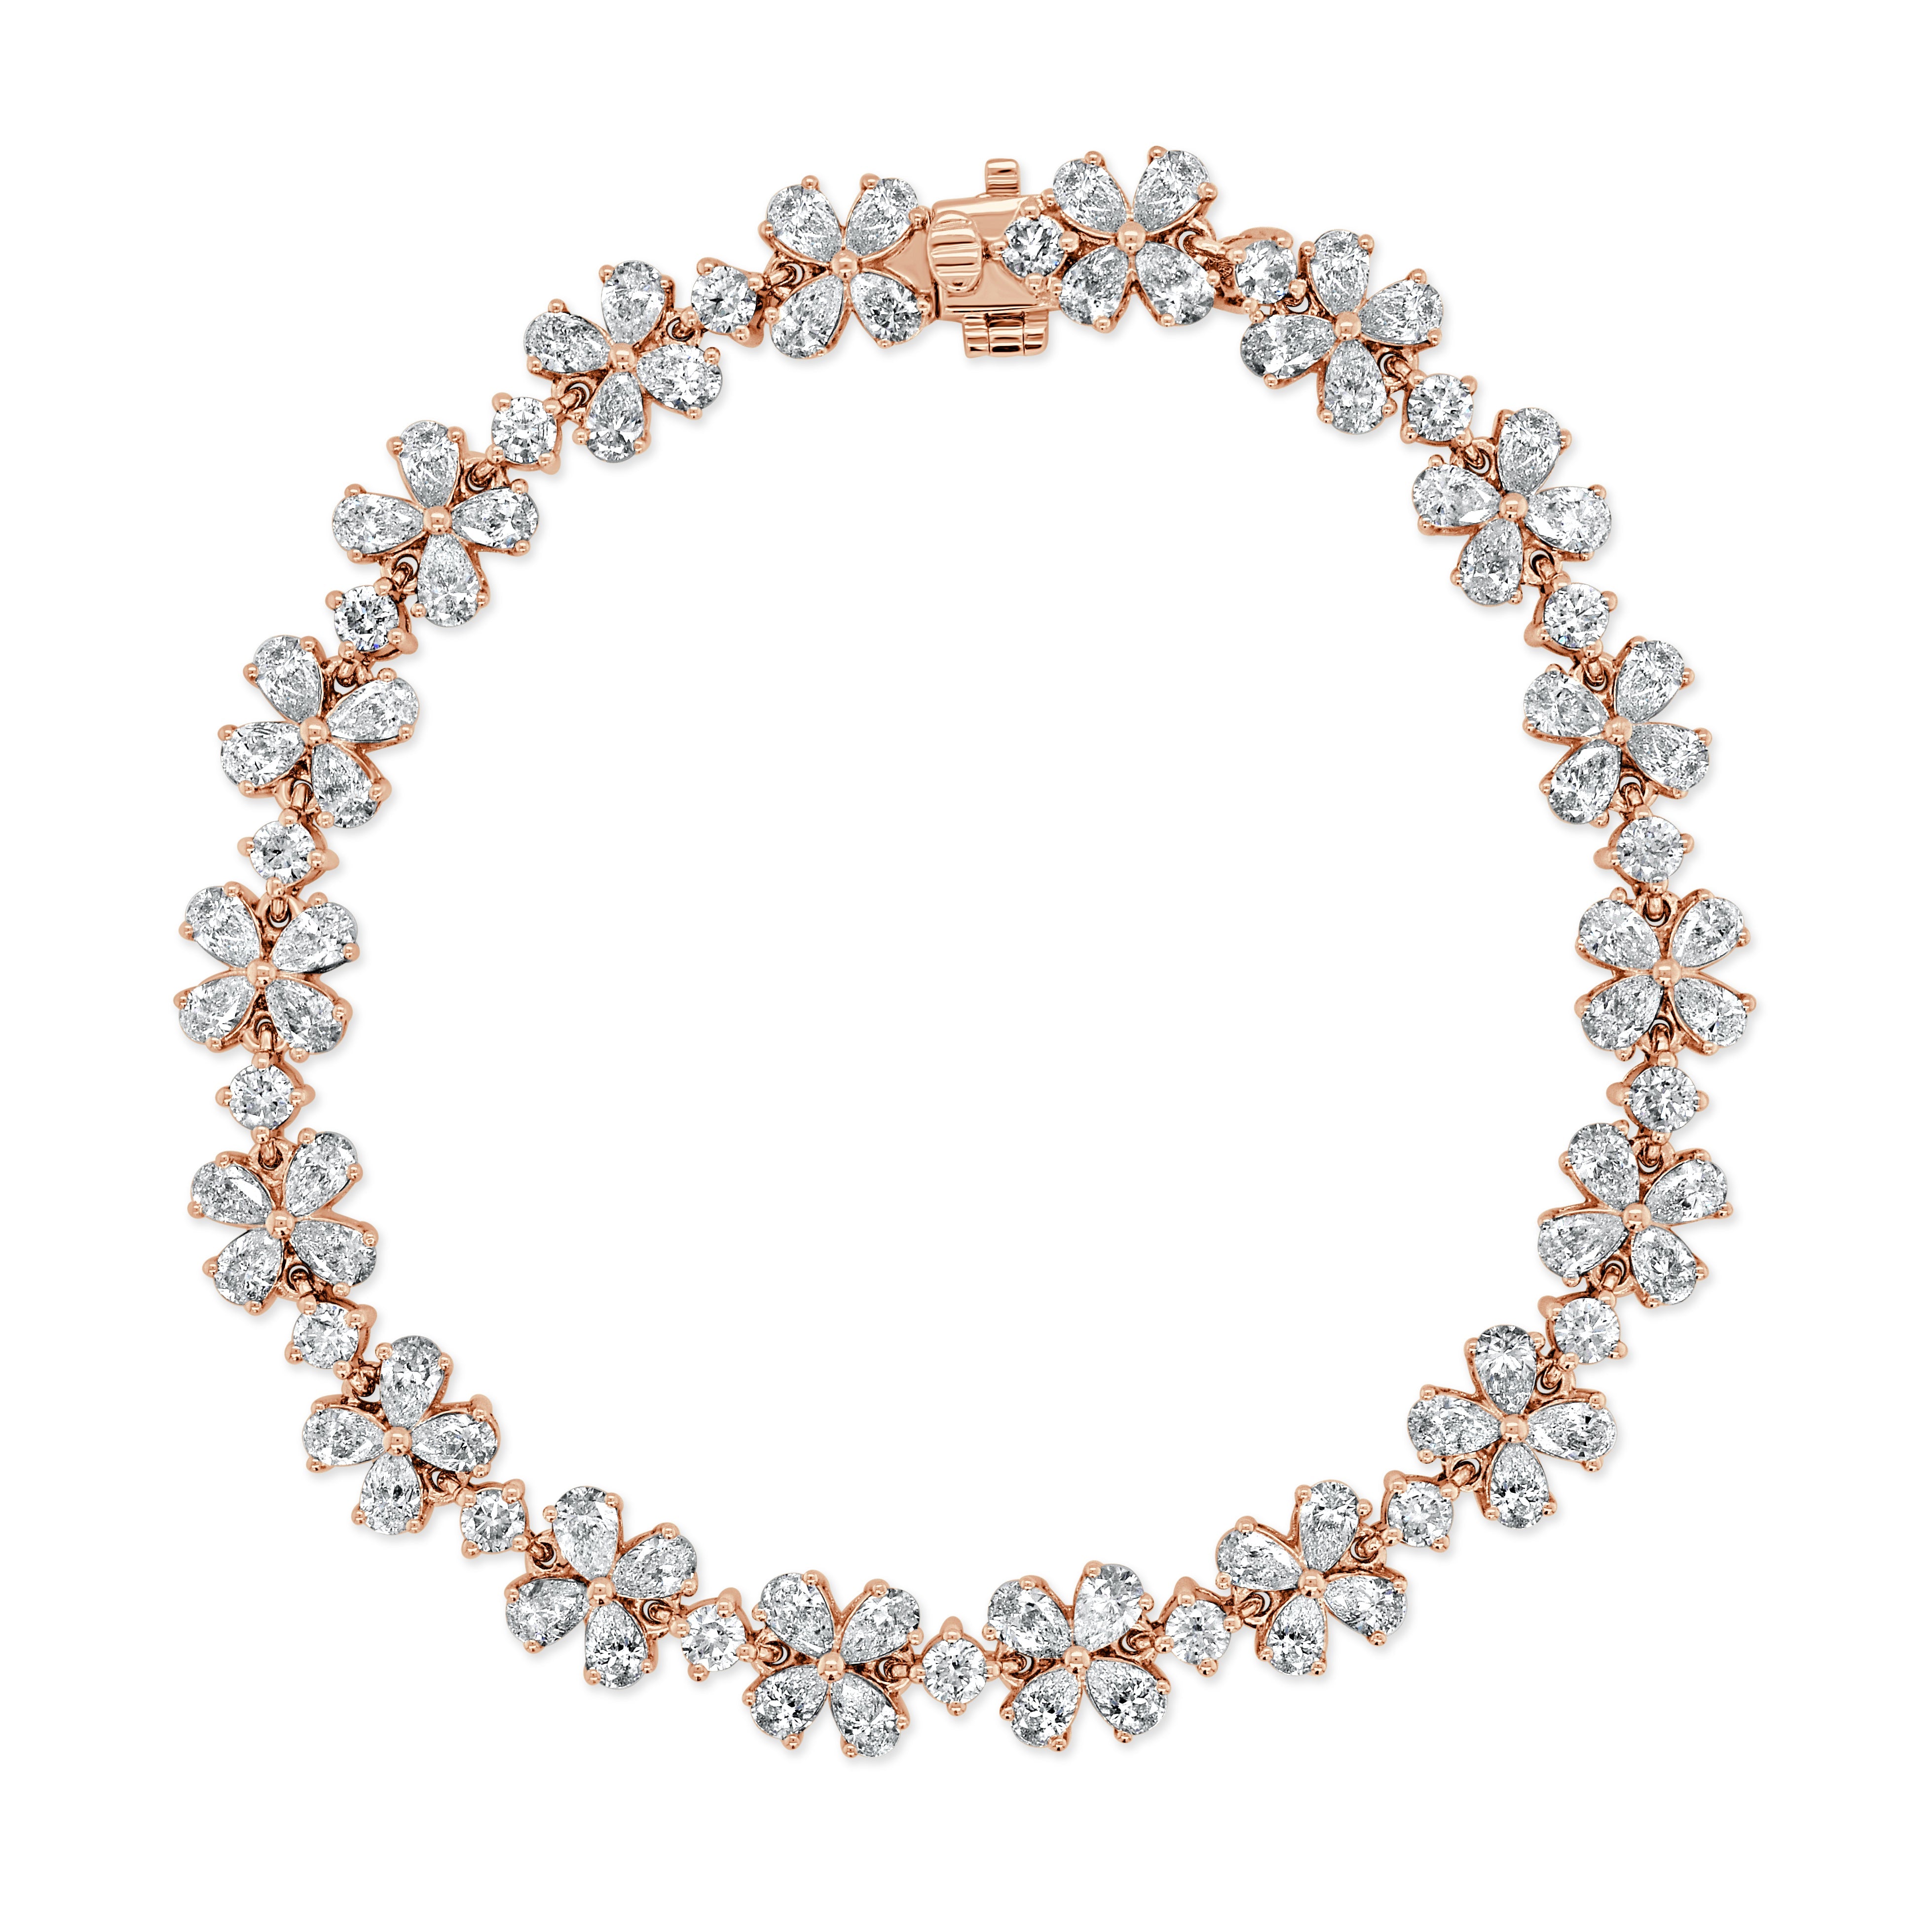 14K Gold & Pear-Shaped Diamond Flower Bracelet